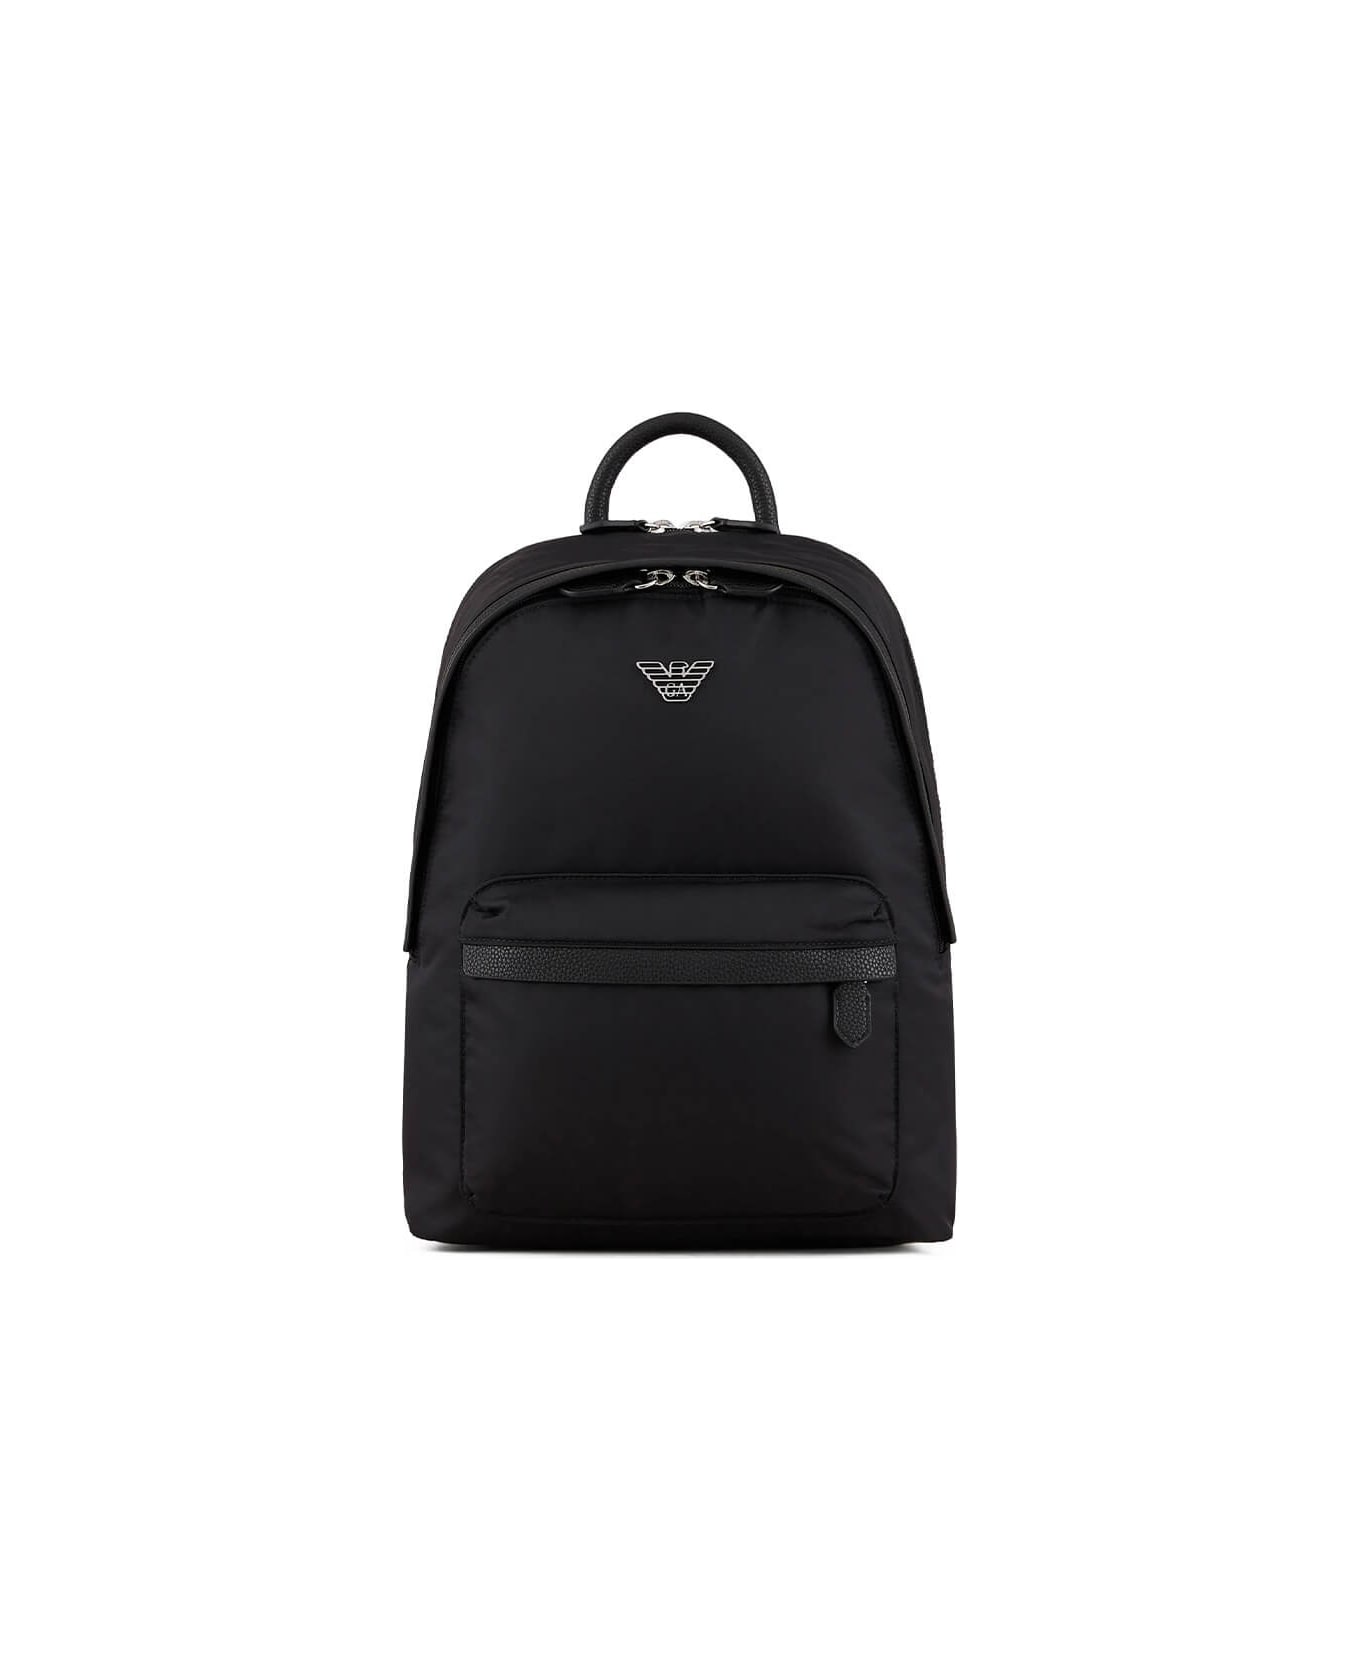 Emporio Armani Travel Essential Black Backpack - Nero